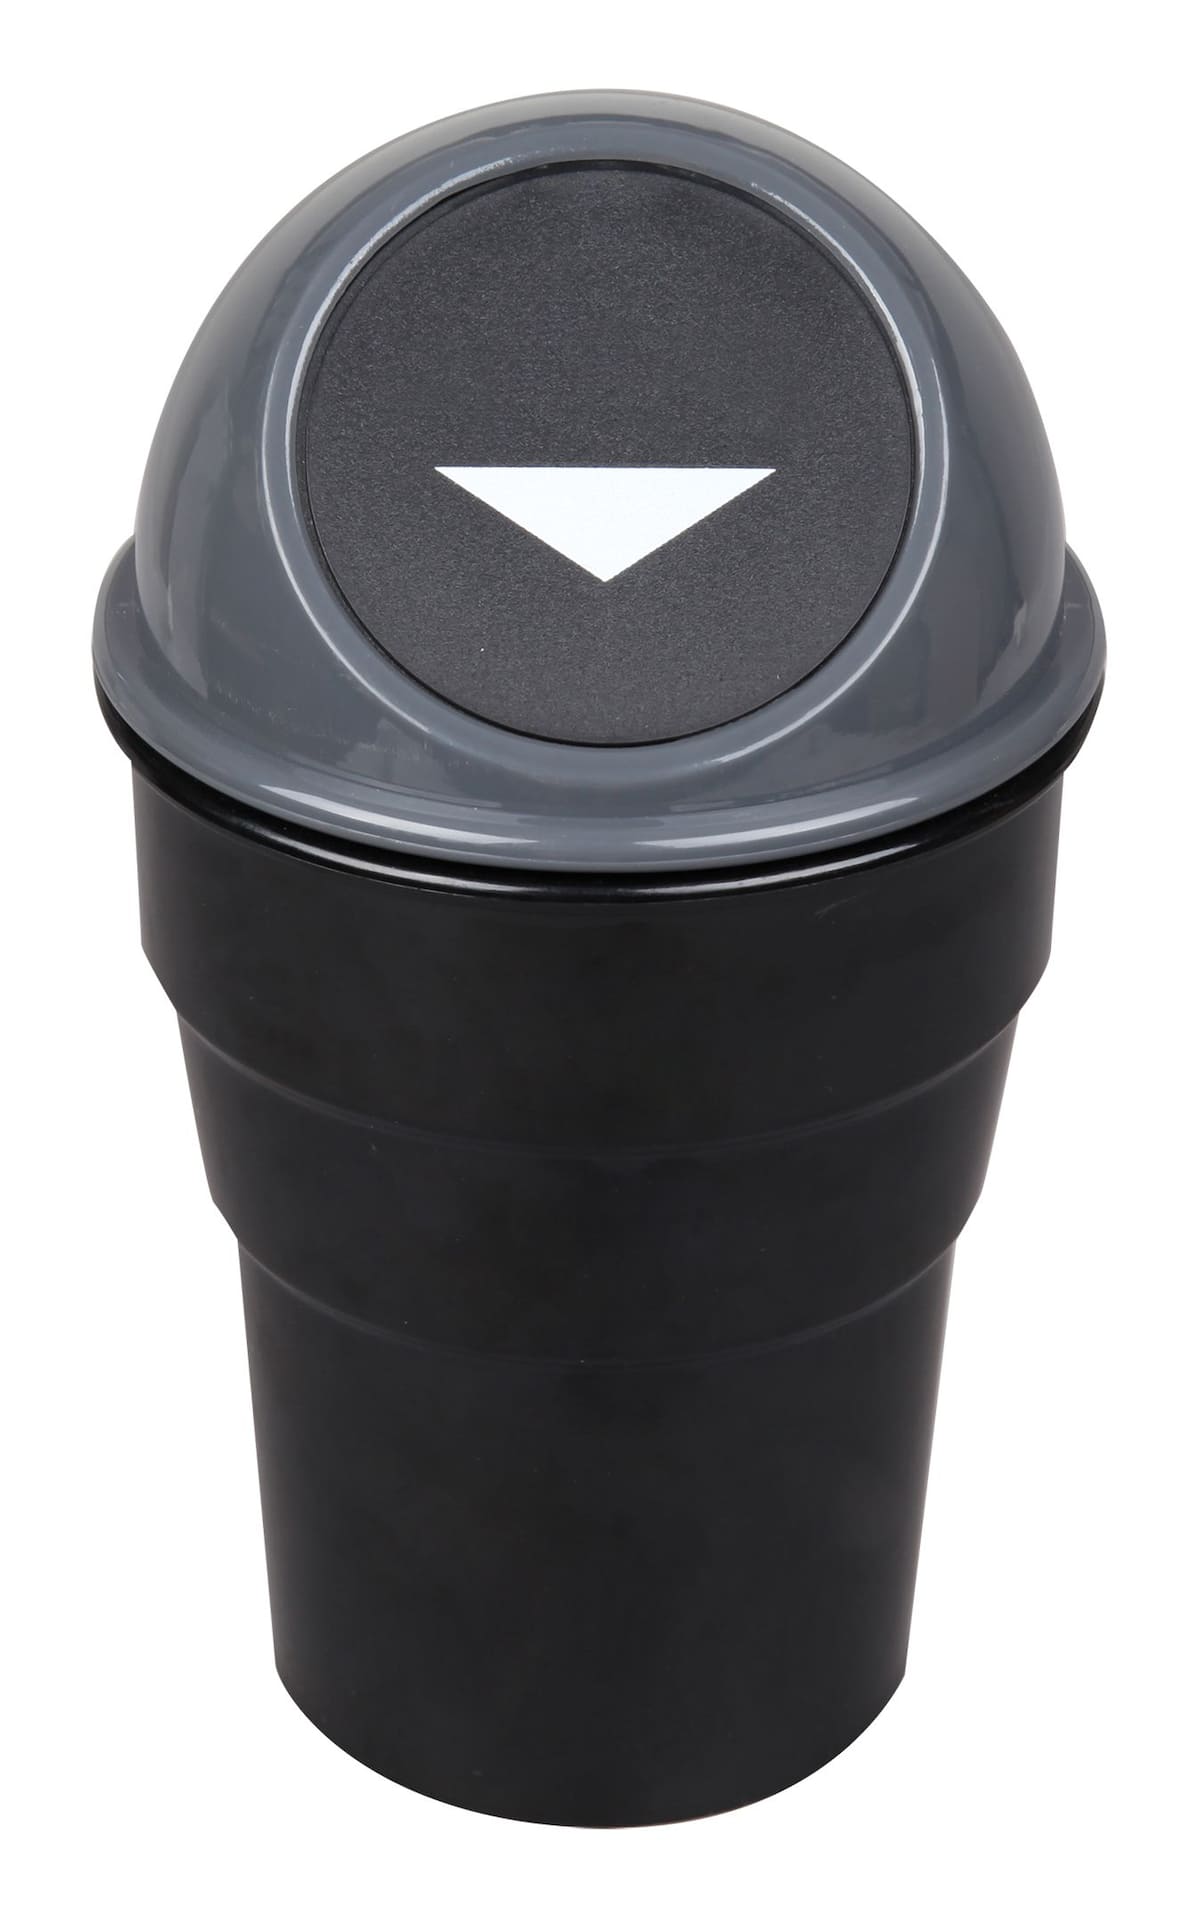 AutoTrends Compact Cup Trash Bin